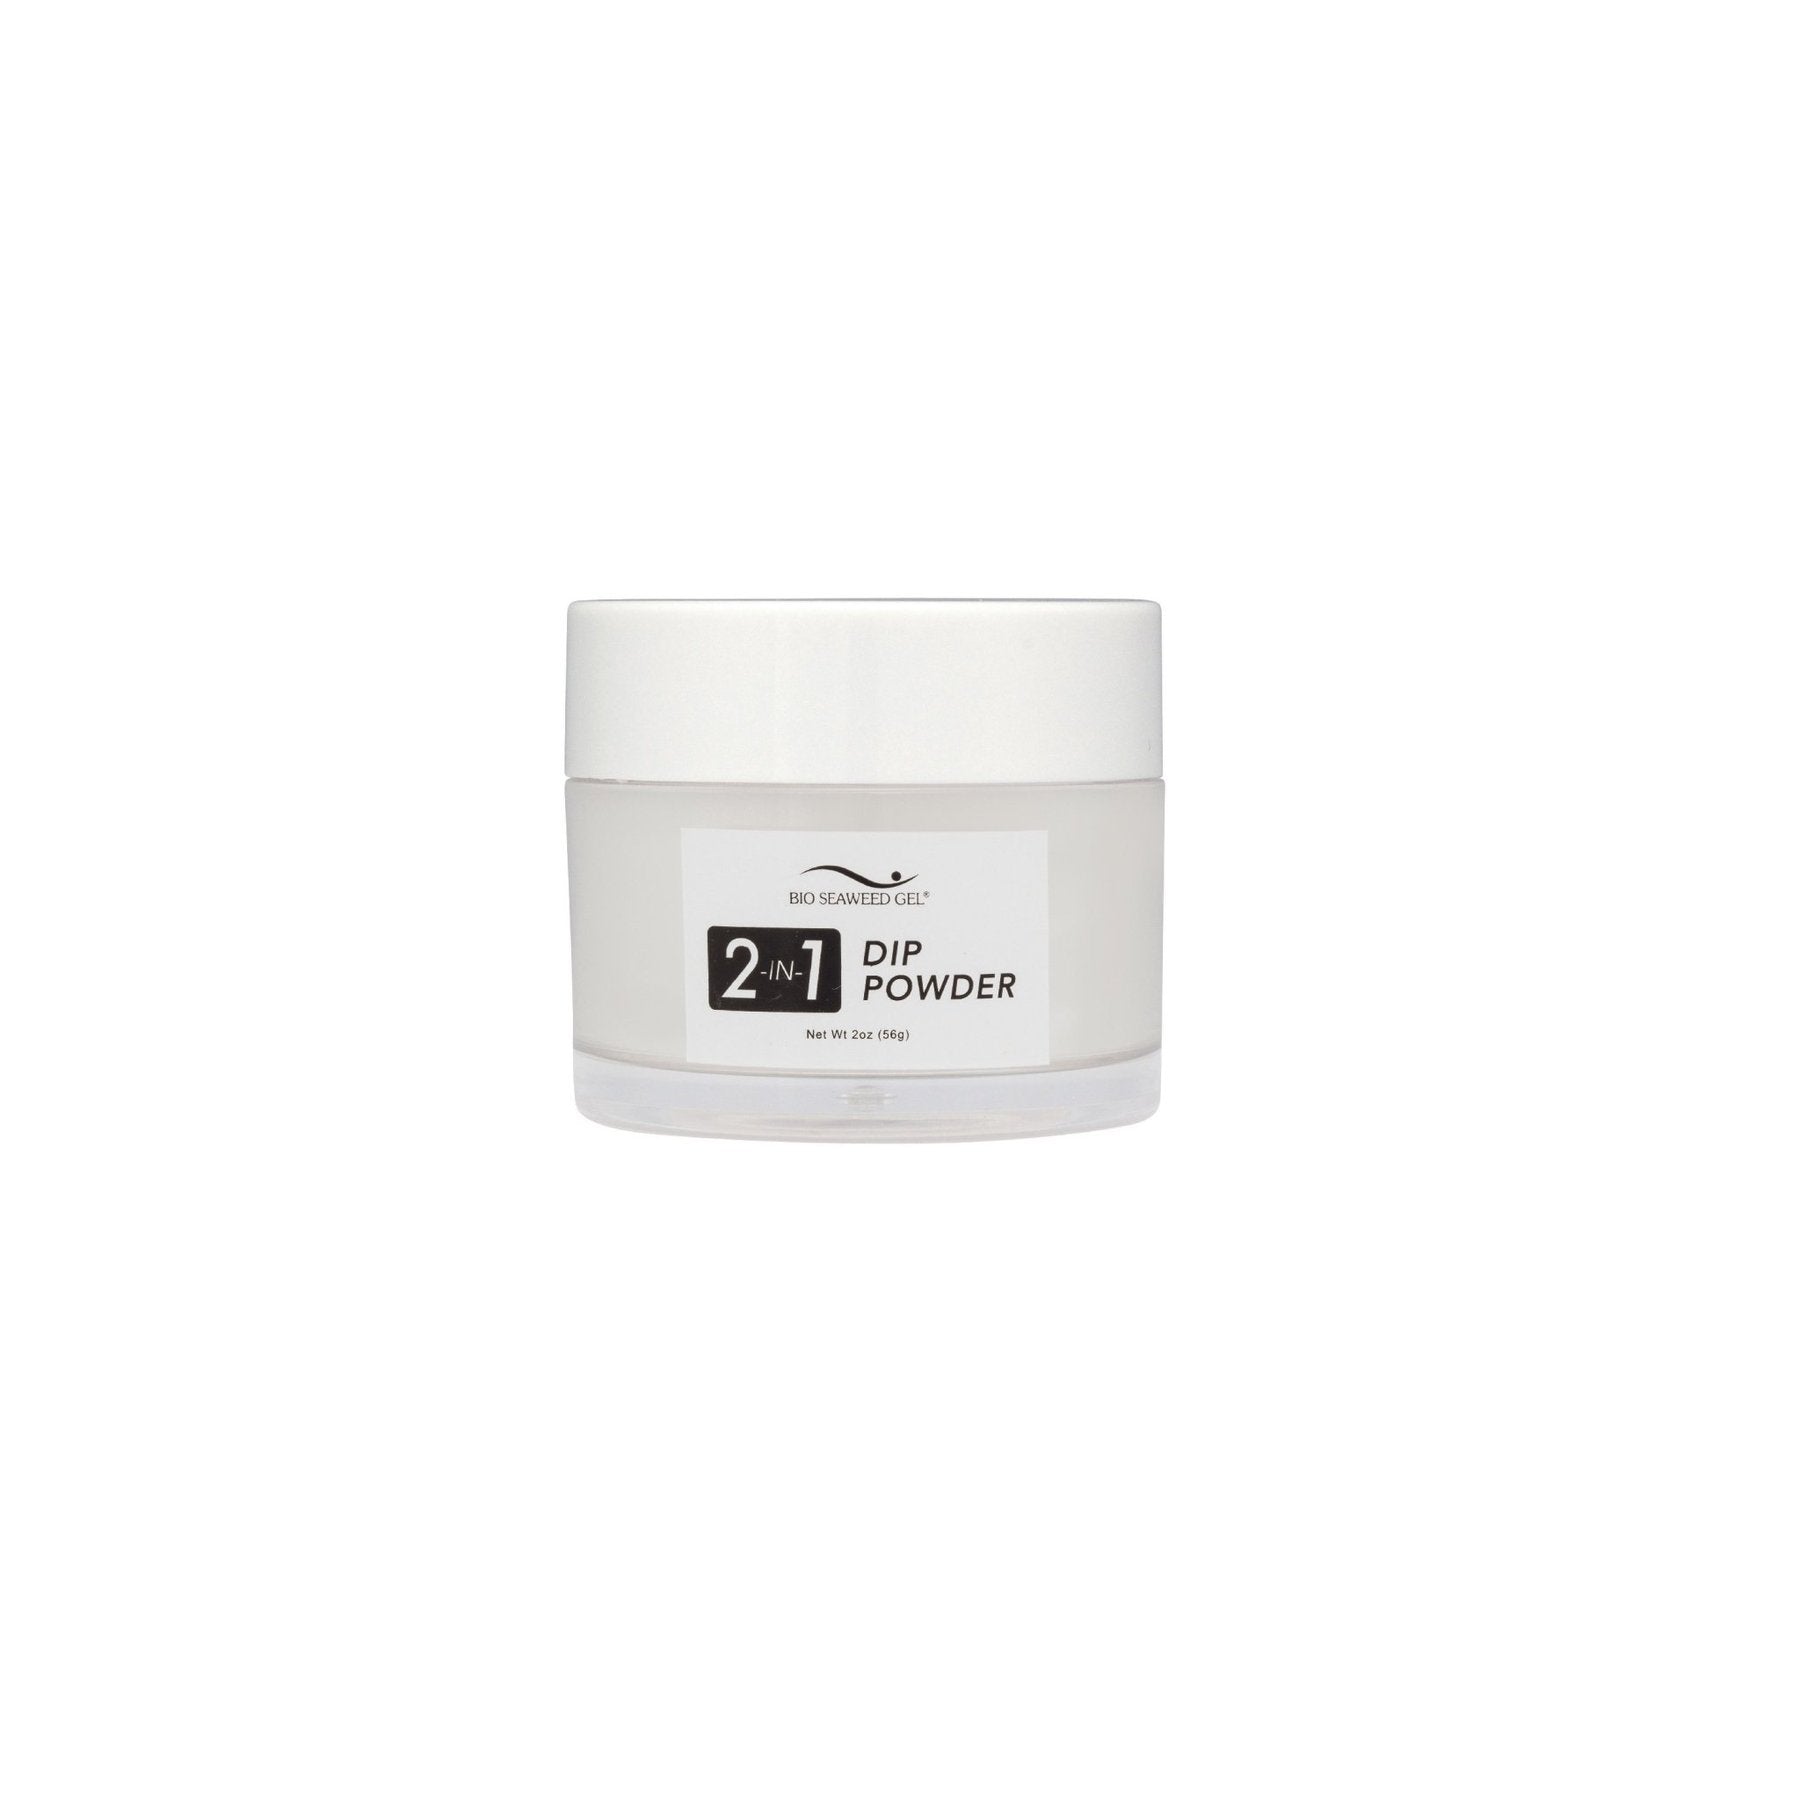 00 CLEAR | Bio Seaweed Gel® Dip Powder System - CM Nails & Beauty Supply